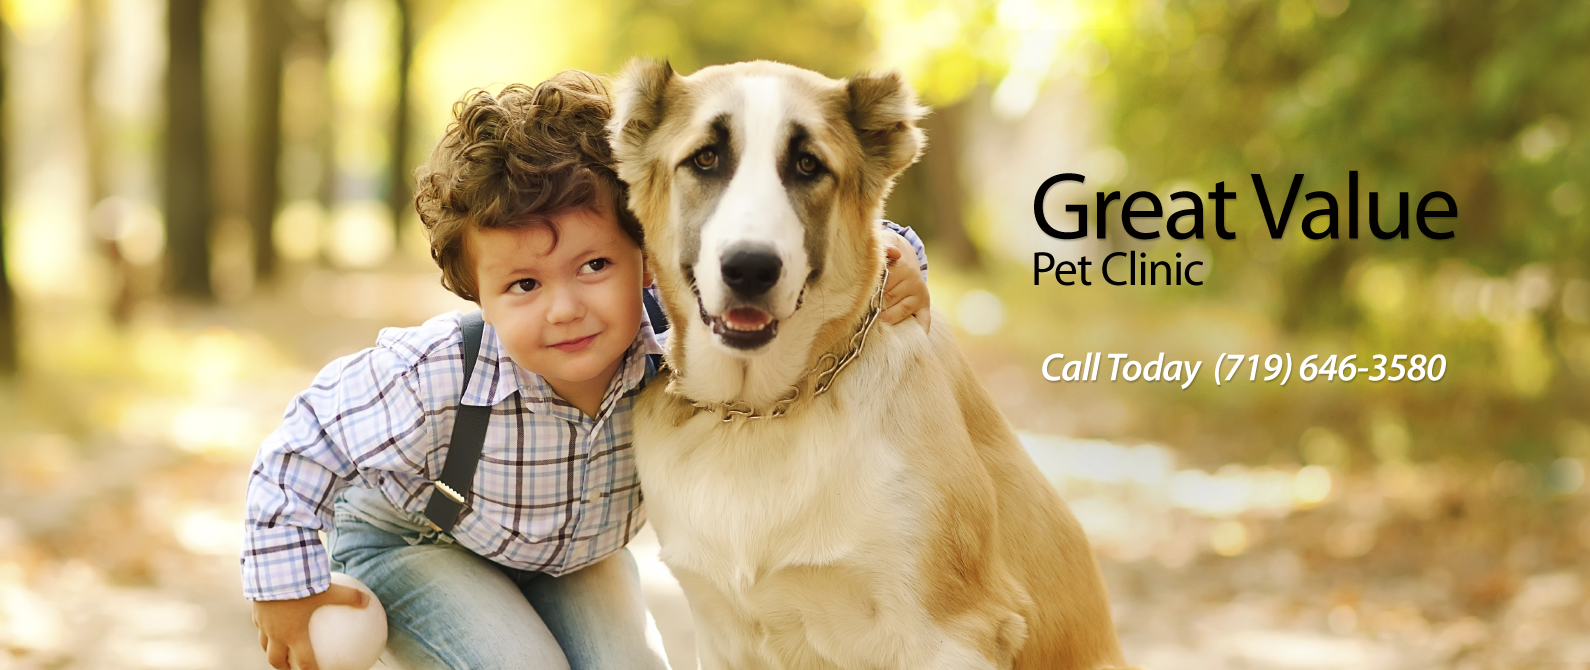 Great Value Pet Clinic, LLC